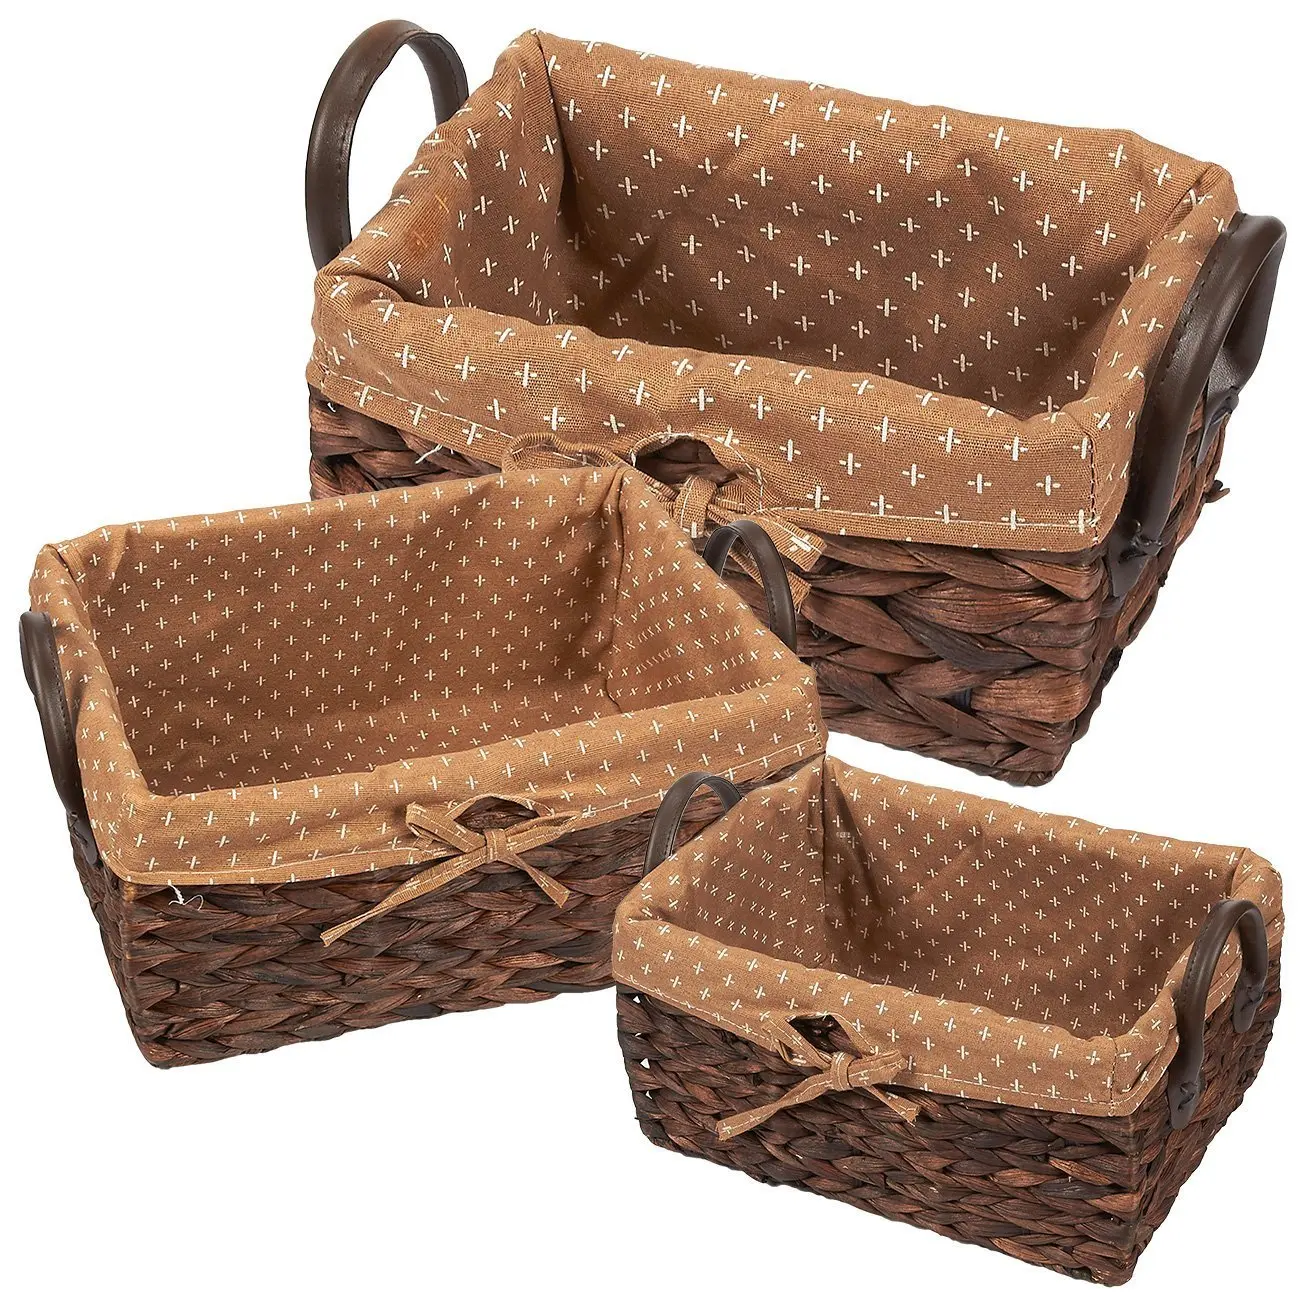 decorative baskets for shelves